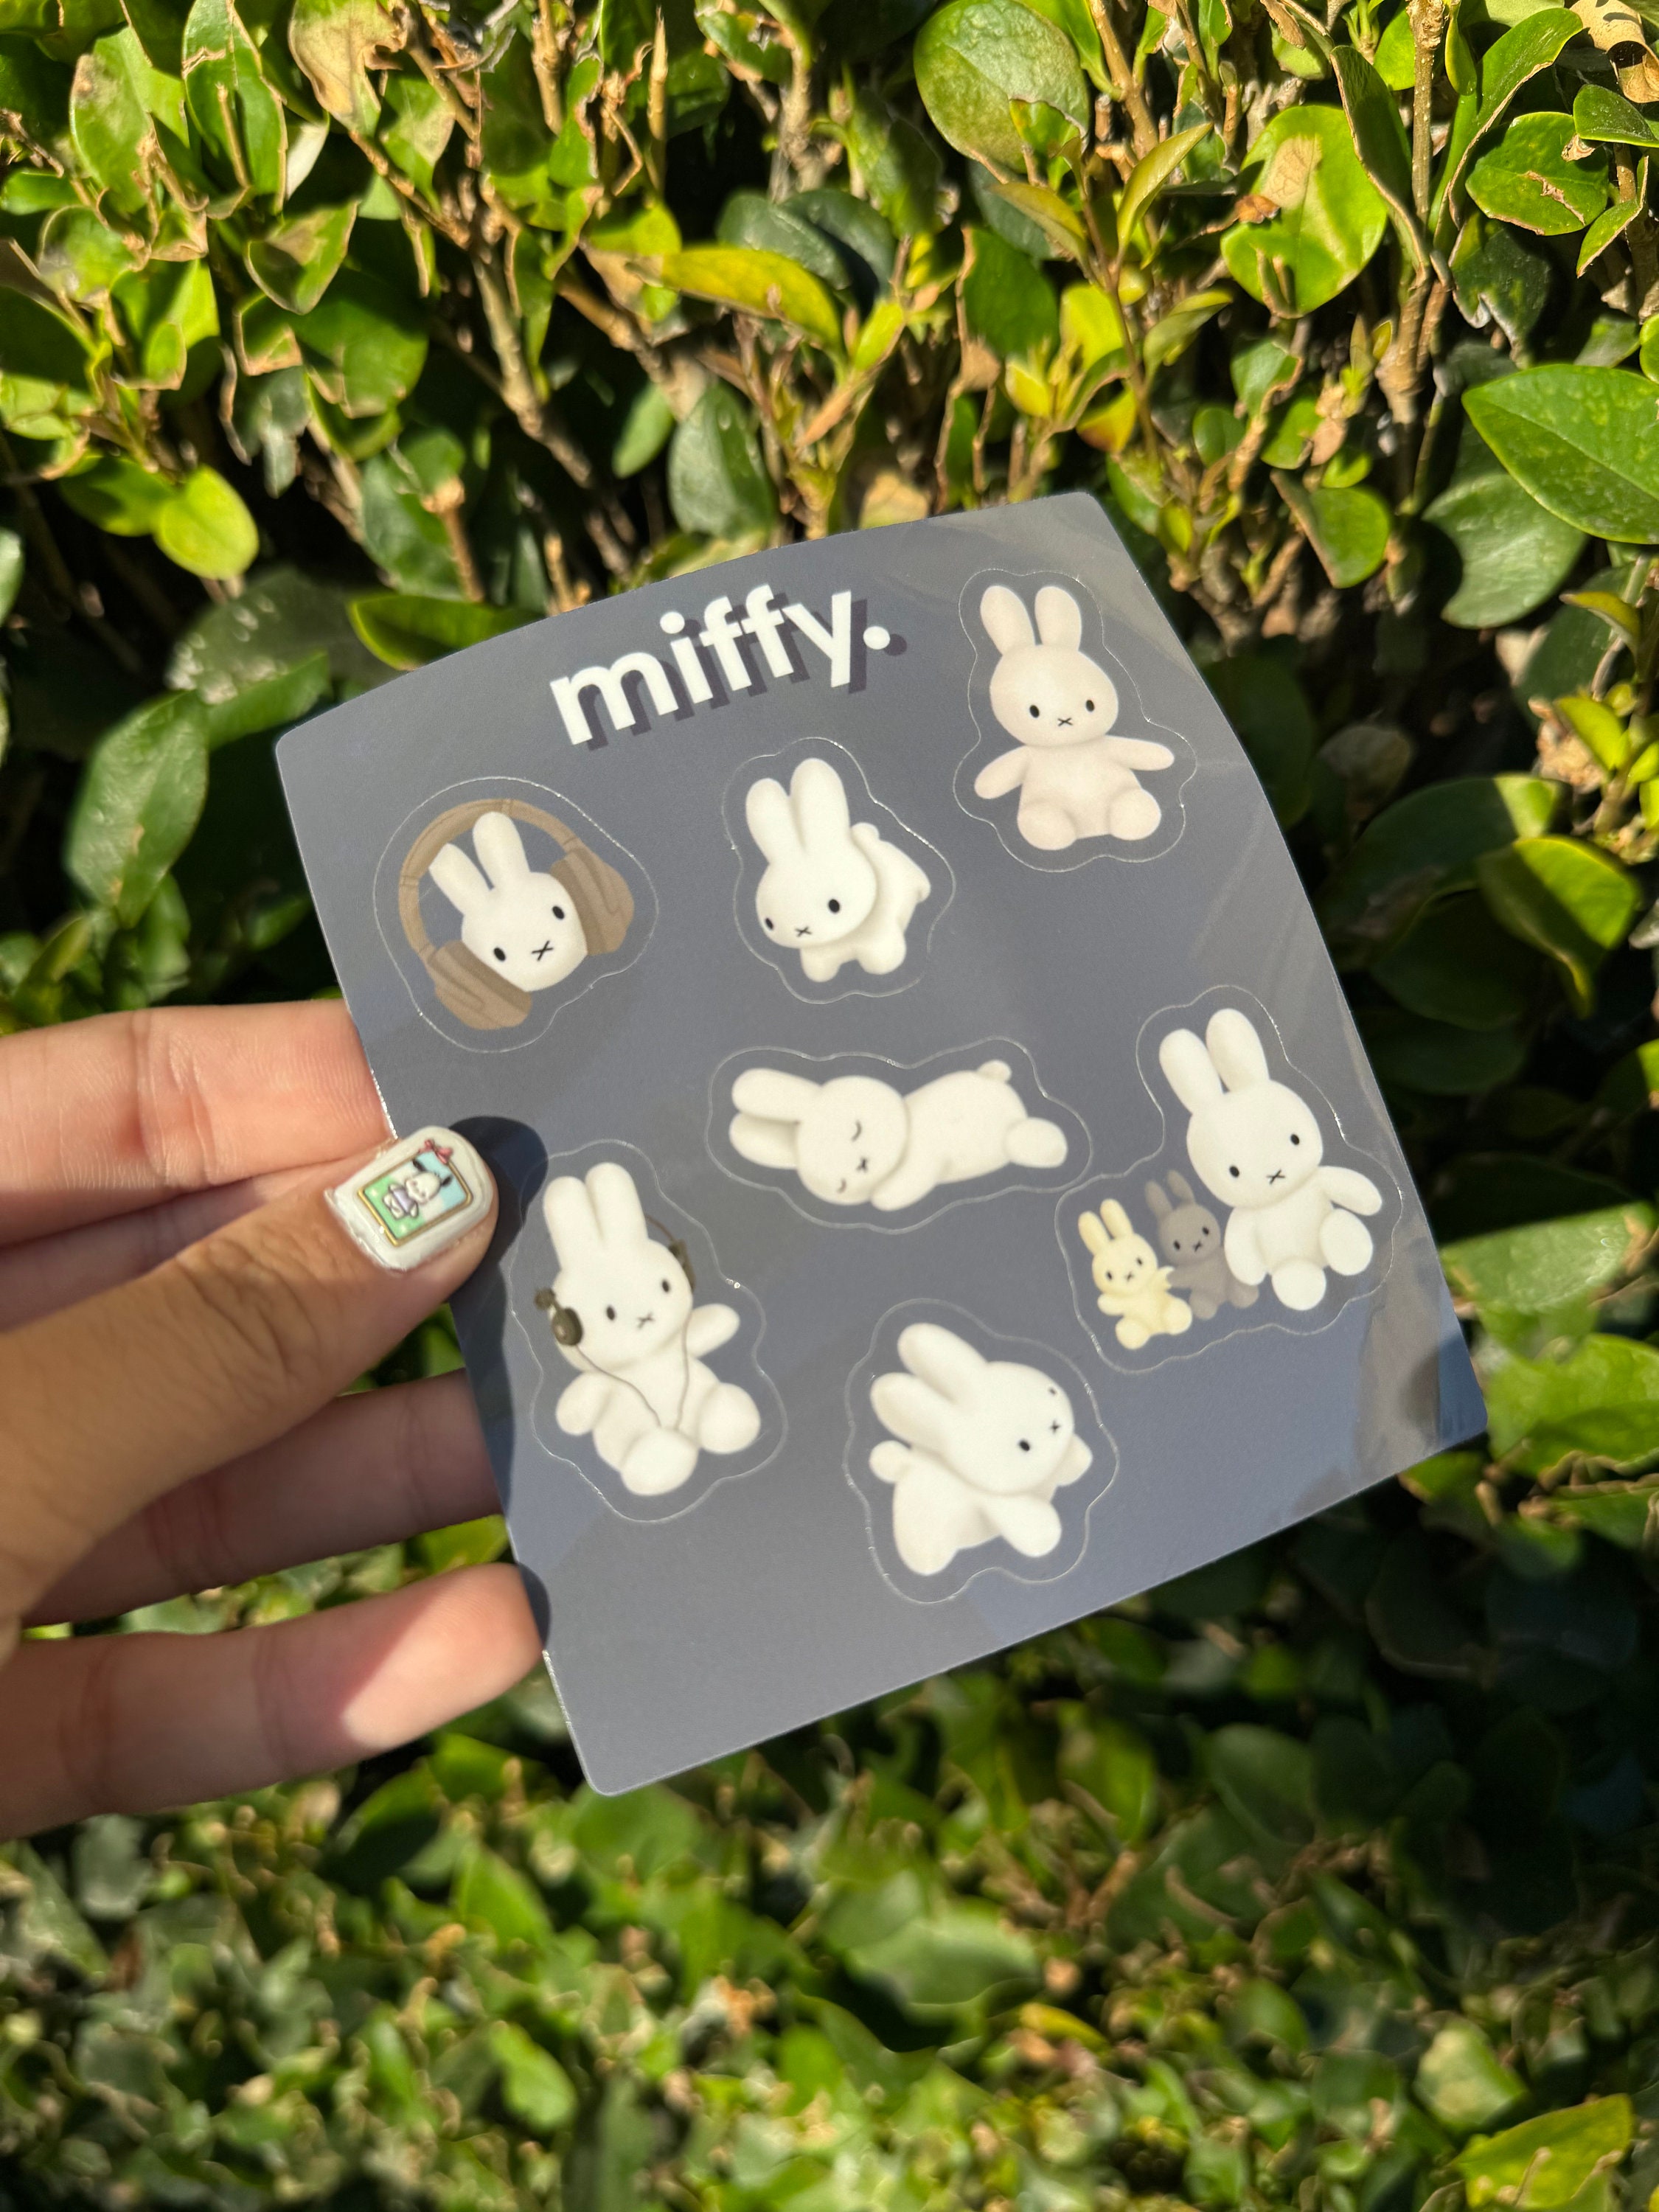 New Miffy Stickers 🐇 #miffy #miffyandfriends #miffybunny